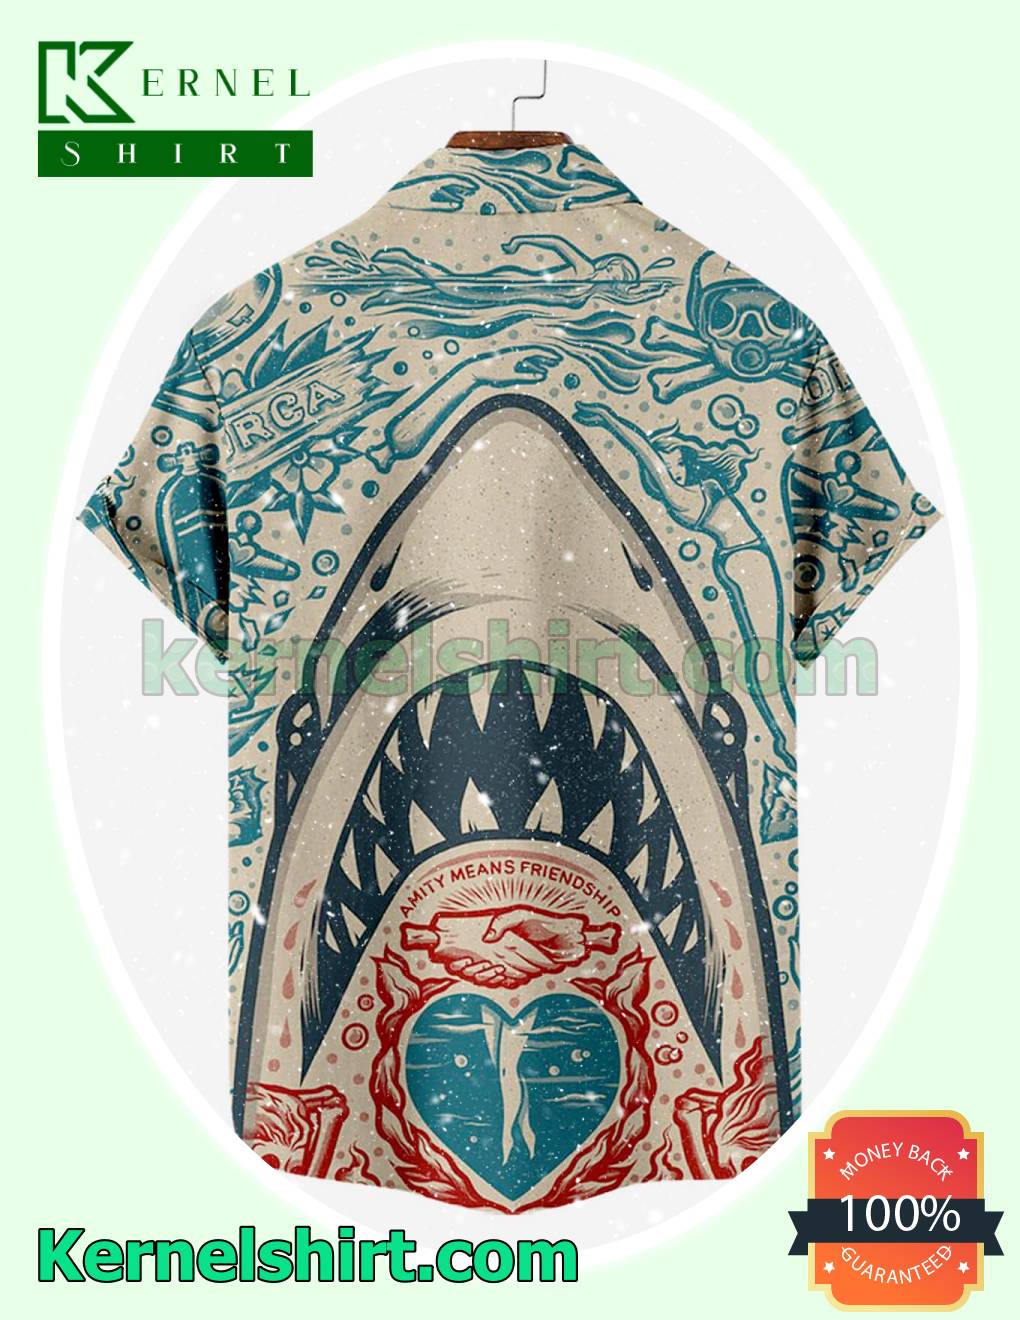 Where To Buy Shark Amity Means Friendship Summer Aloha Shirt